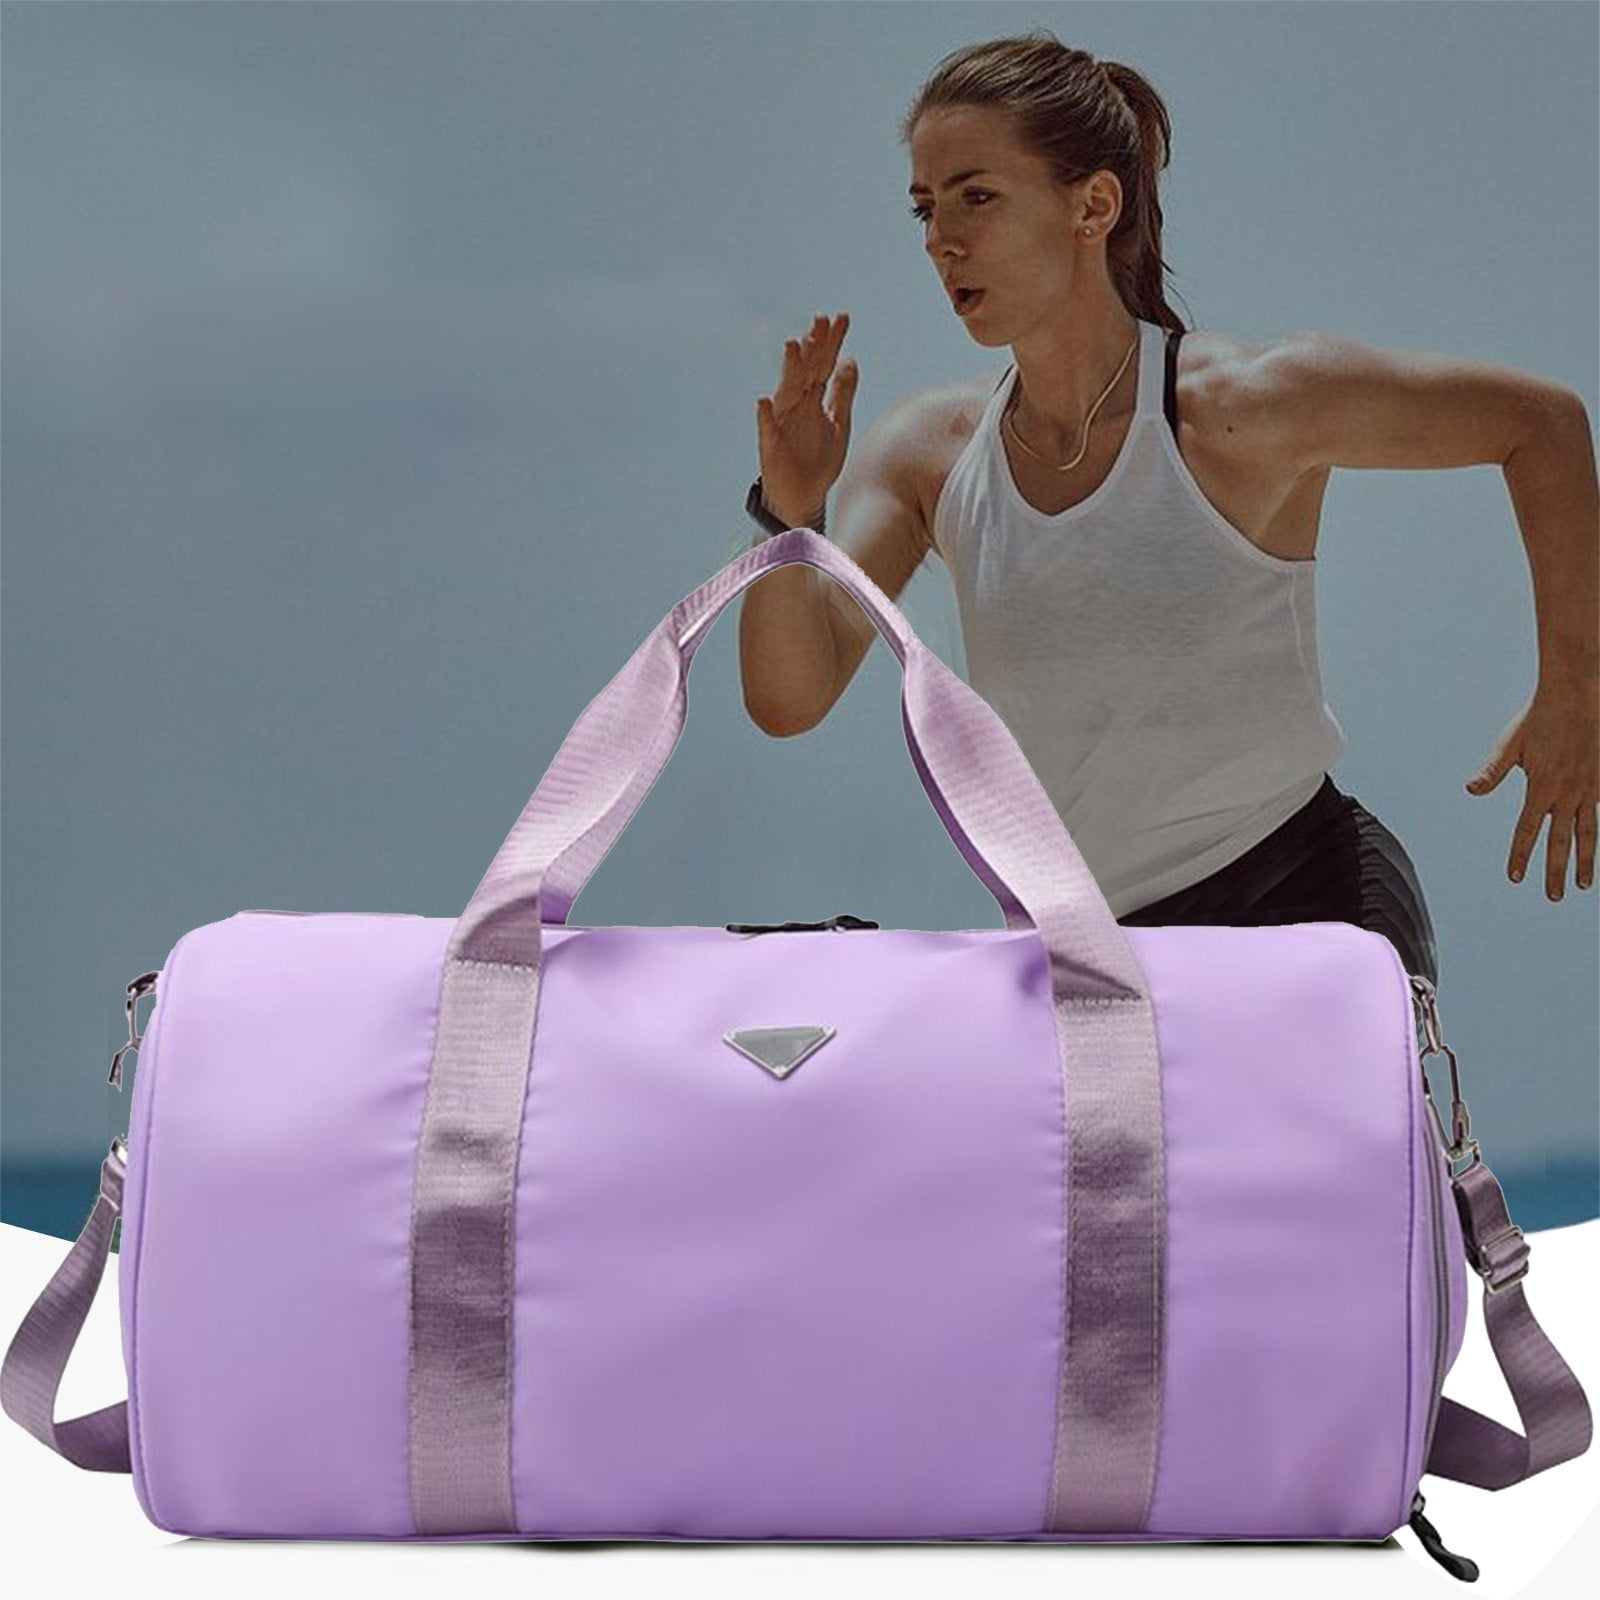 MAVL 18 Small Duffle Bag Multicolor Toned Gym Travel Bag,Small Gym Bag  Sports Duffle for Women Men,…See more MAVL 18 Small Duffle Bag Multicolor